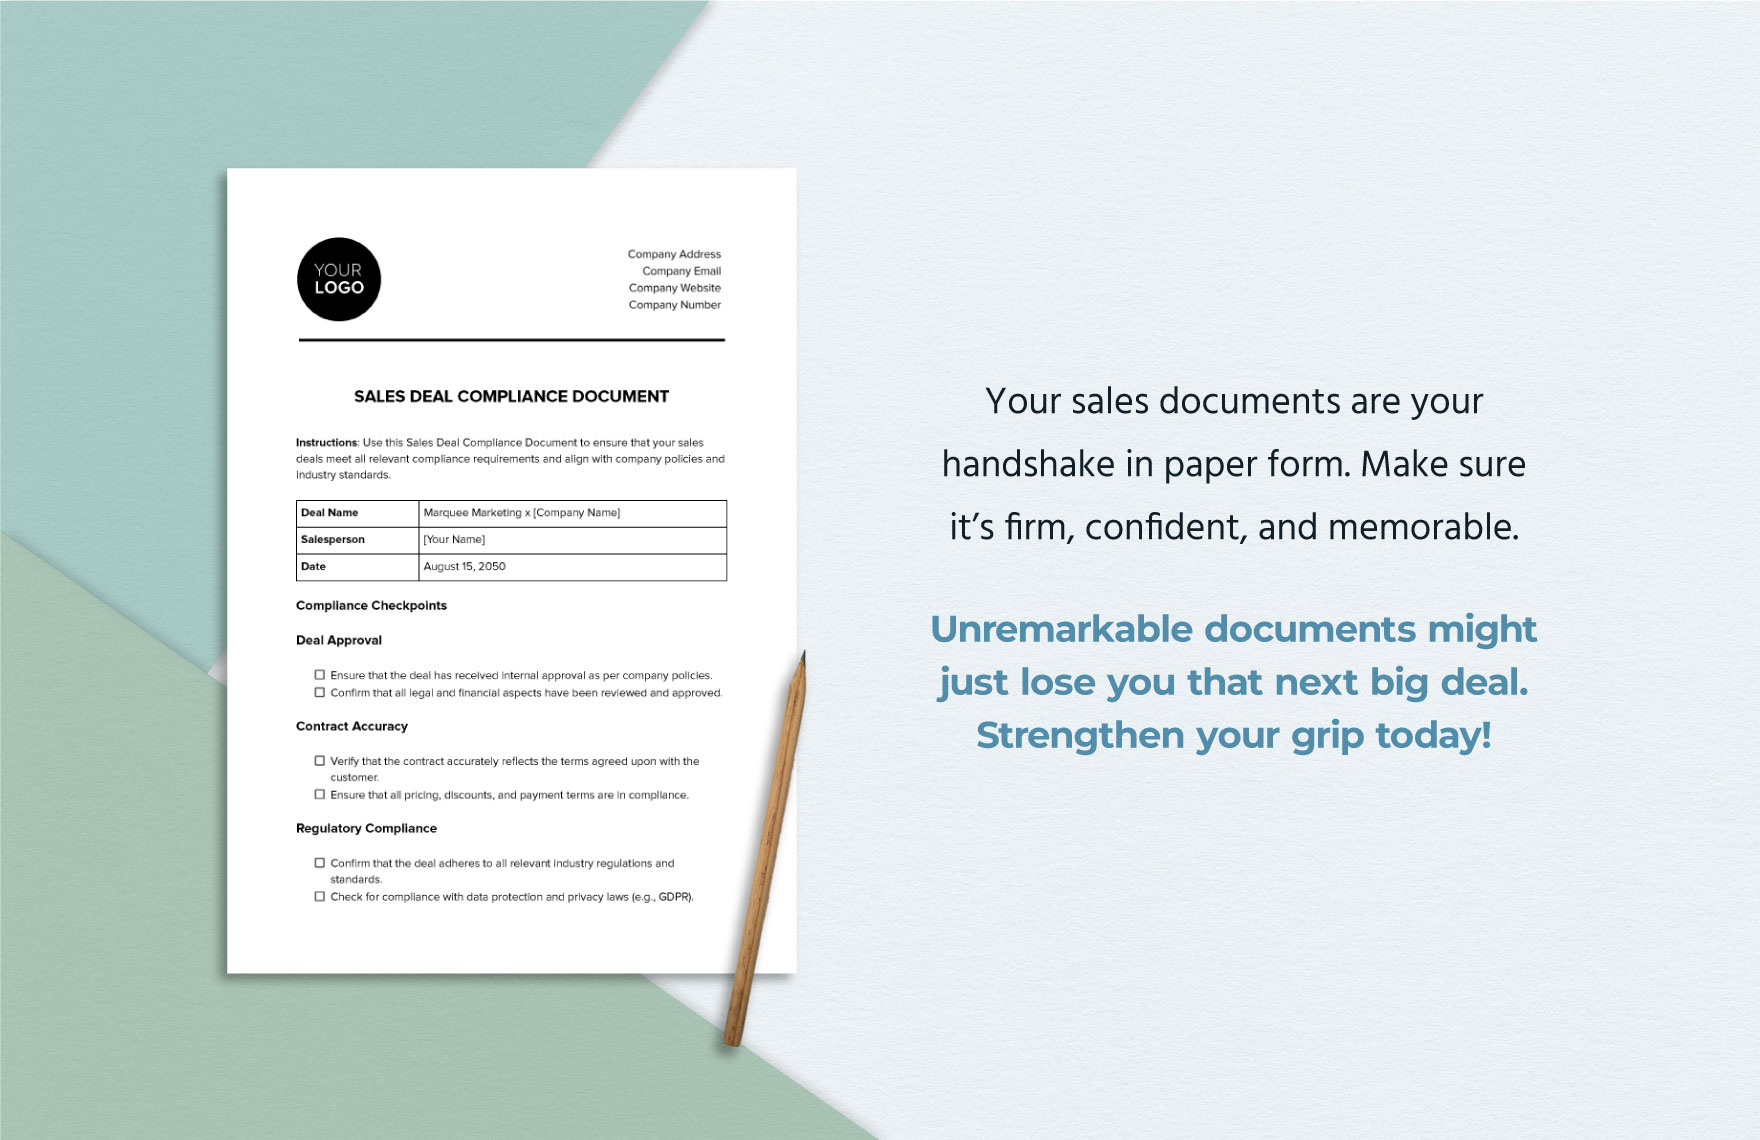 Sales Deal Compliance Document Template